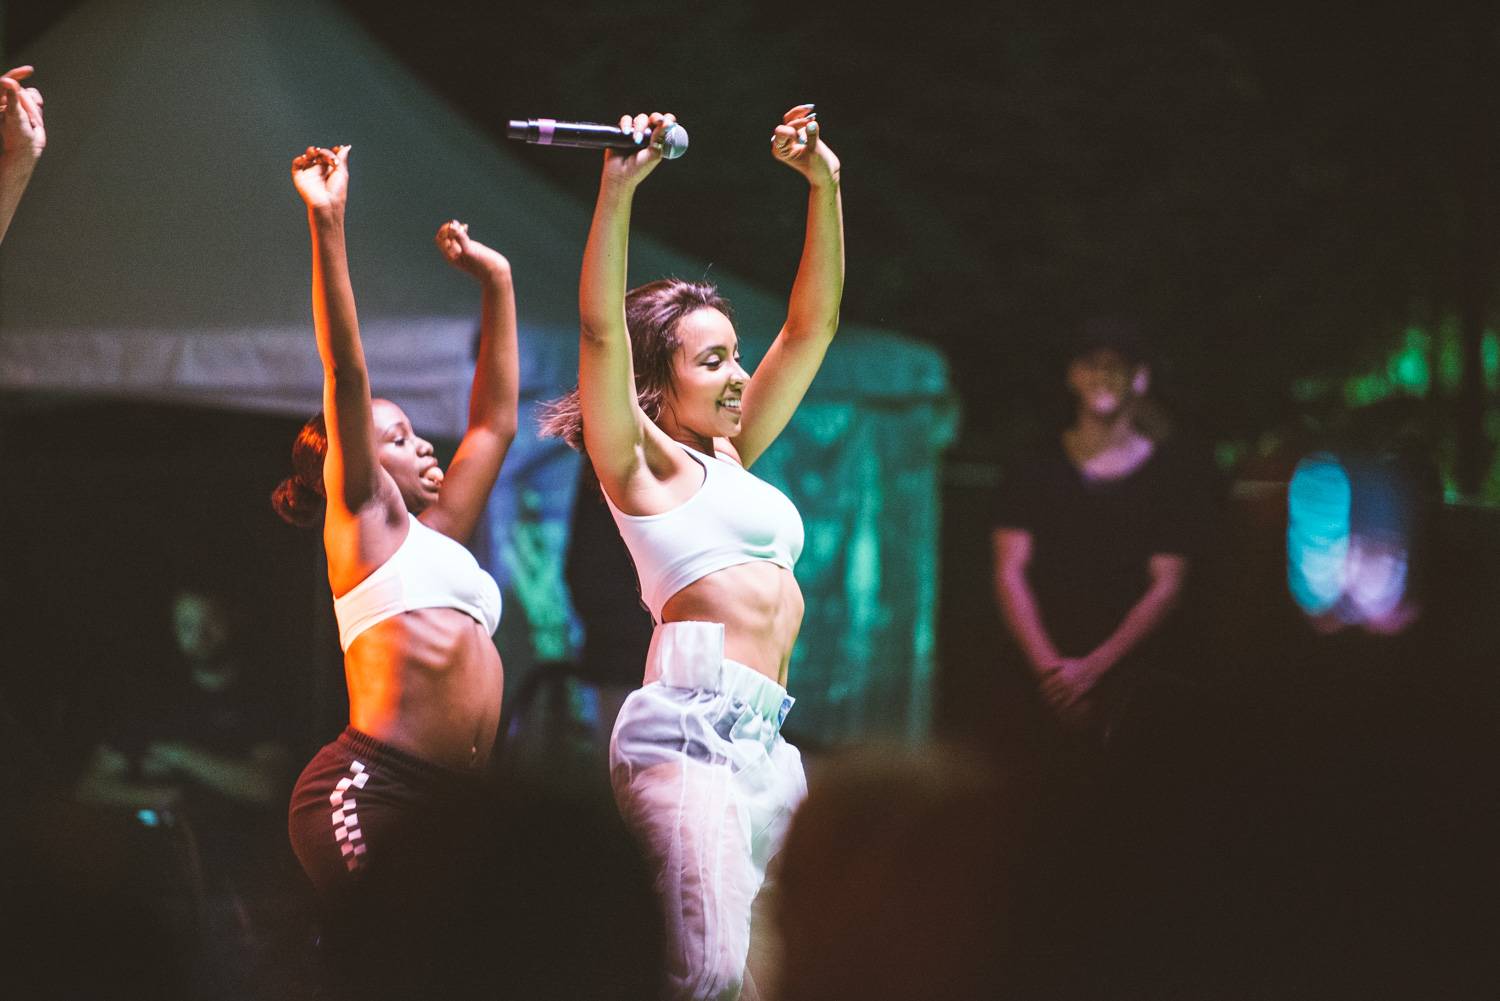 Tinashe at the Bumbershoot Music Festival 2018 - Day 3. Sept 2 2018. Pavel Boiko photo.